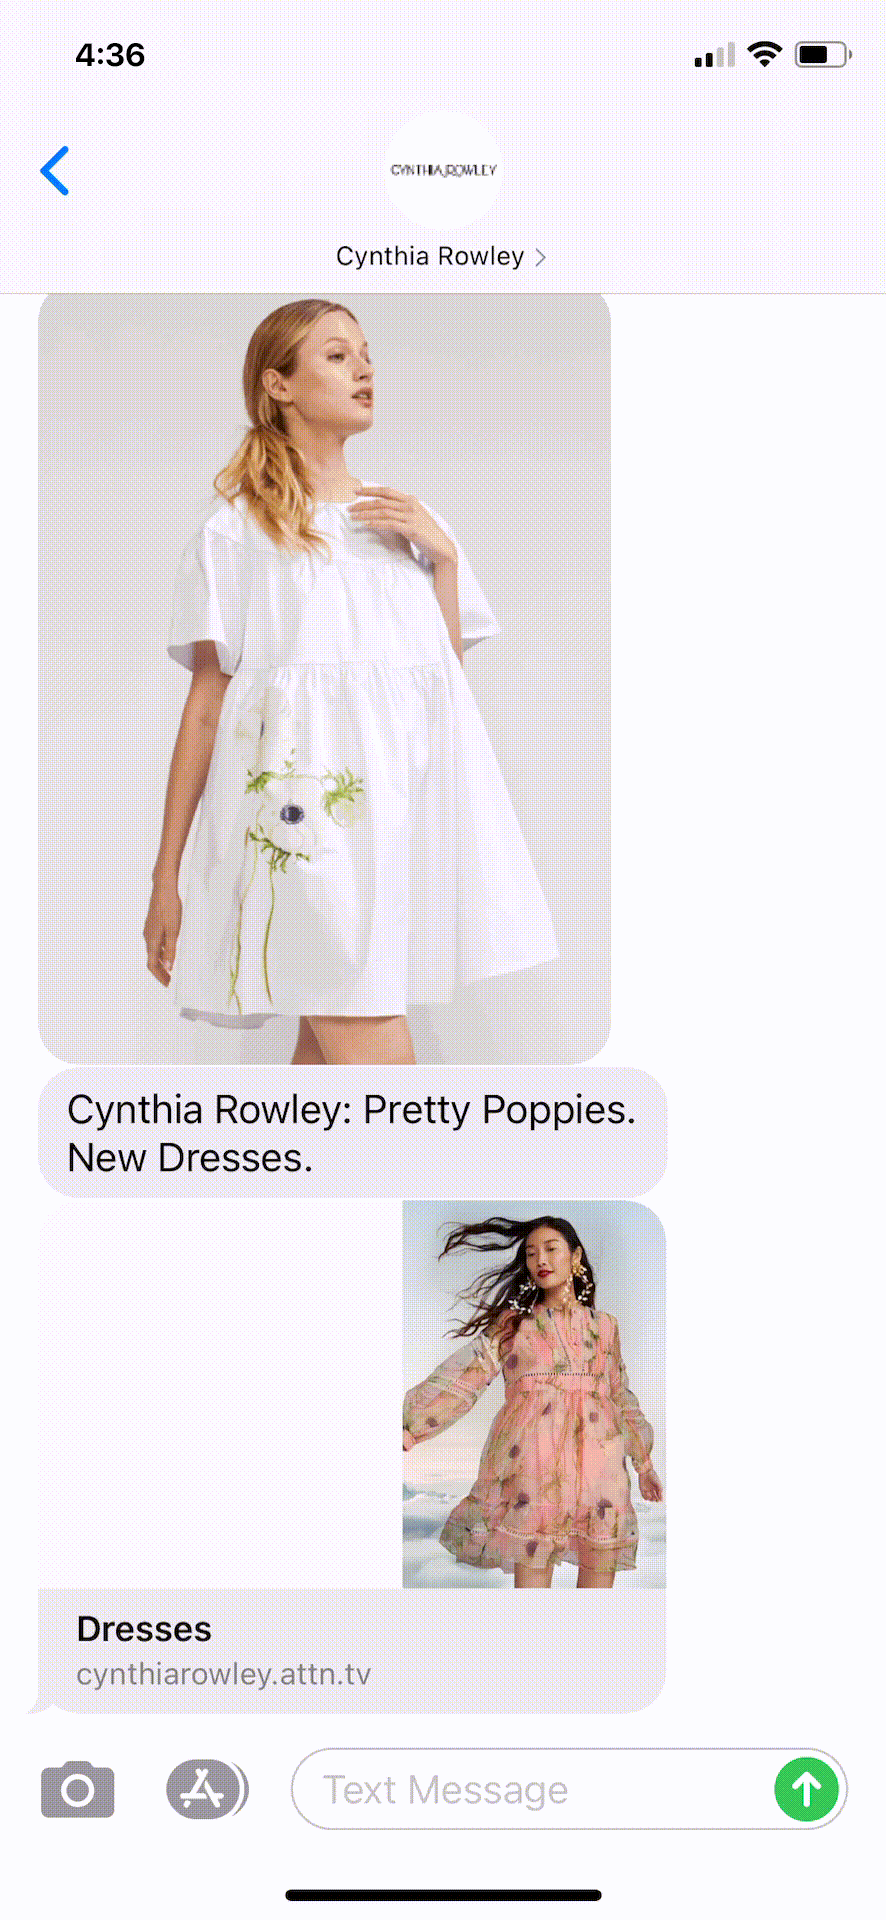 Cynthia-Rowley-Text-Message-Marketing-Example-06.04.2021